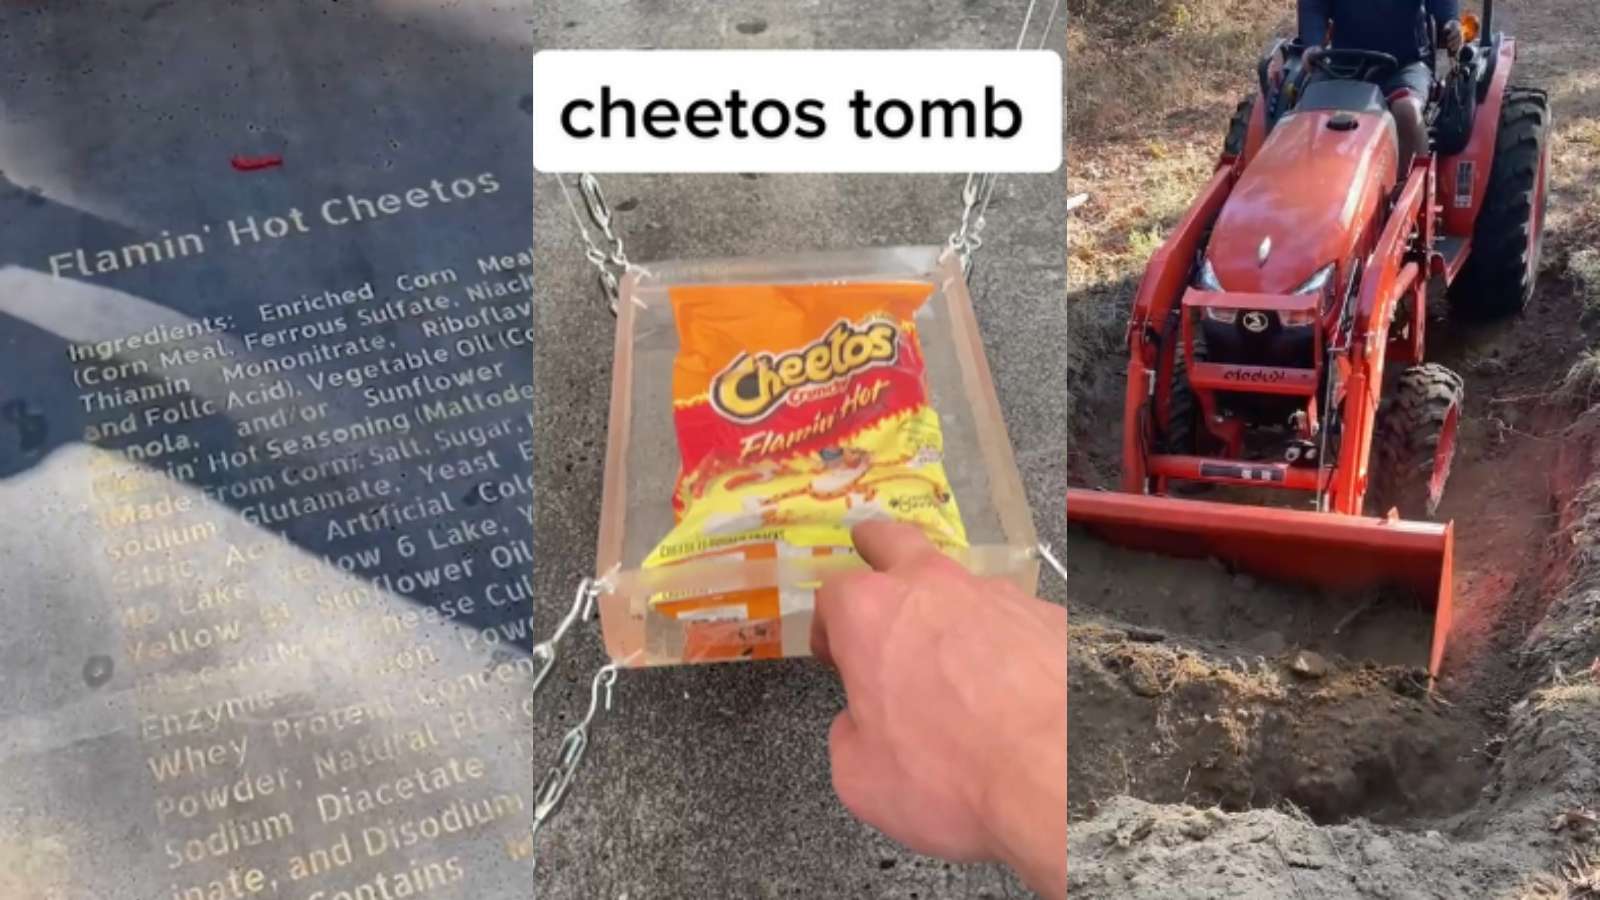 cheetos tomb goes viral on tiktok